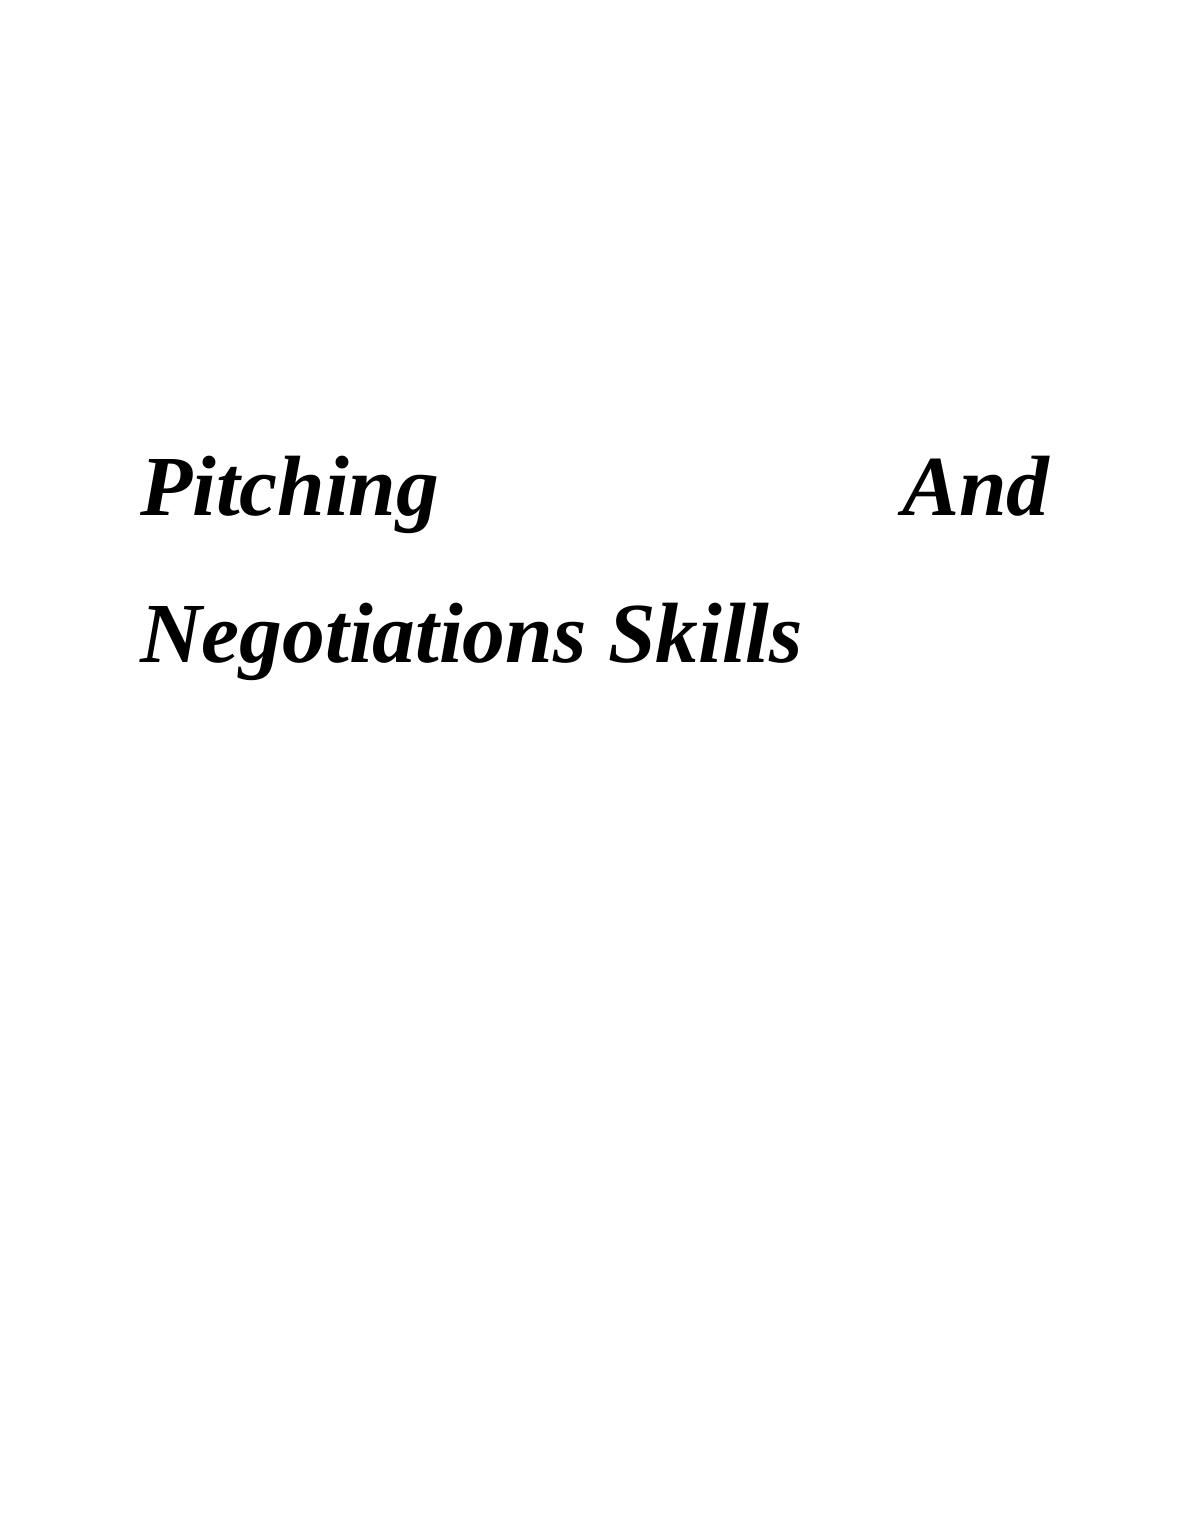 Pitching And Negotiations Skills Process_1